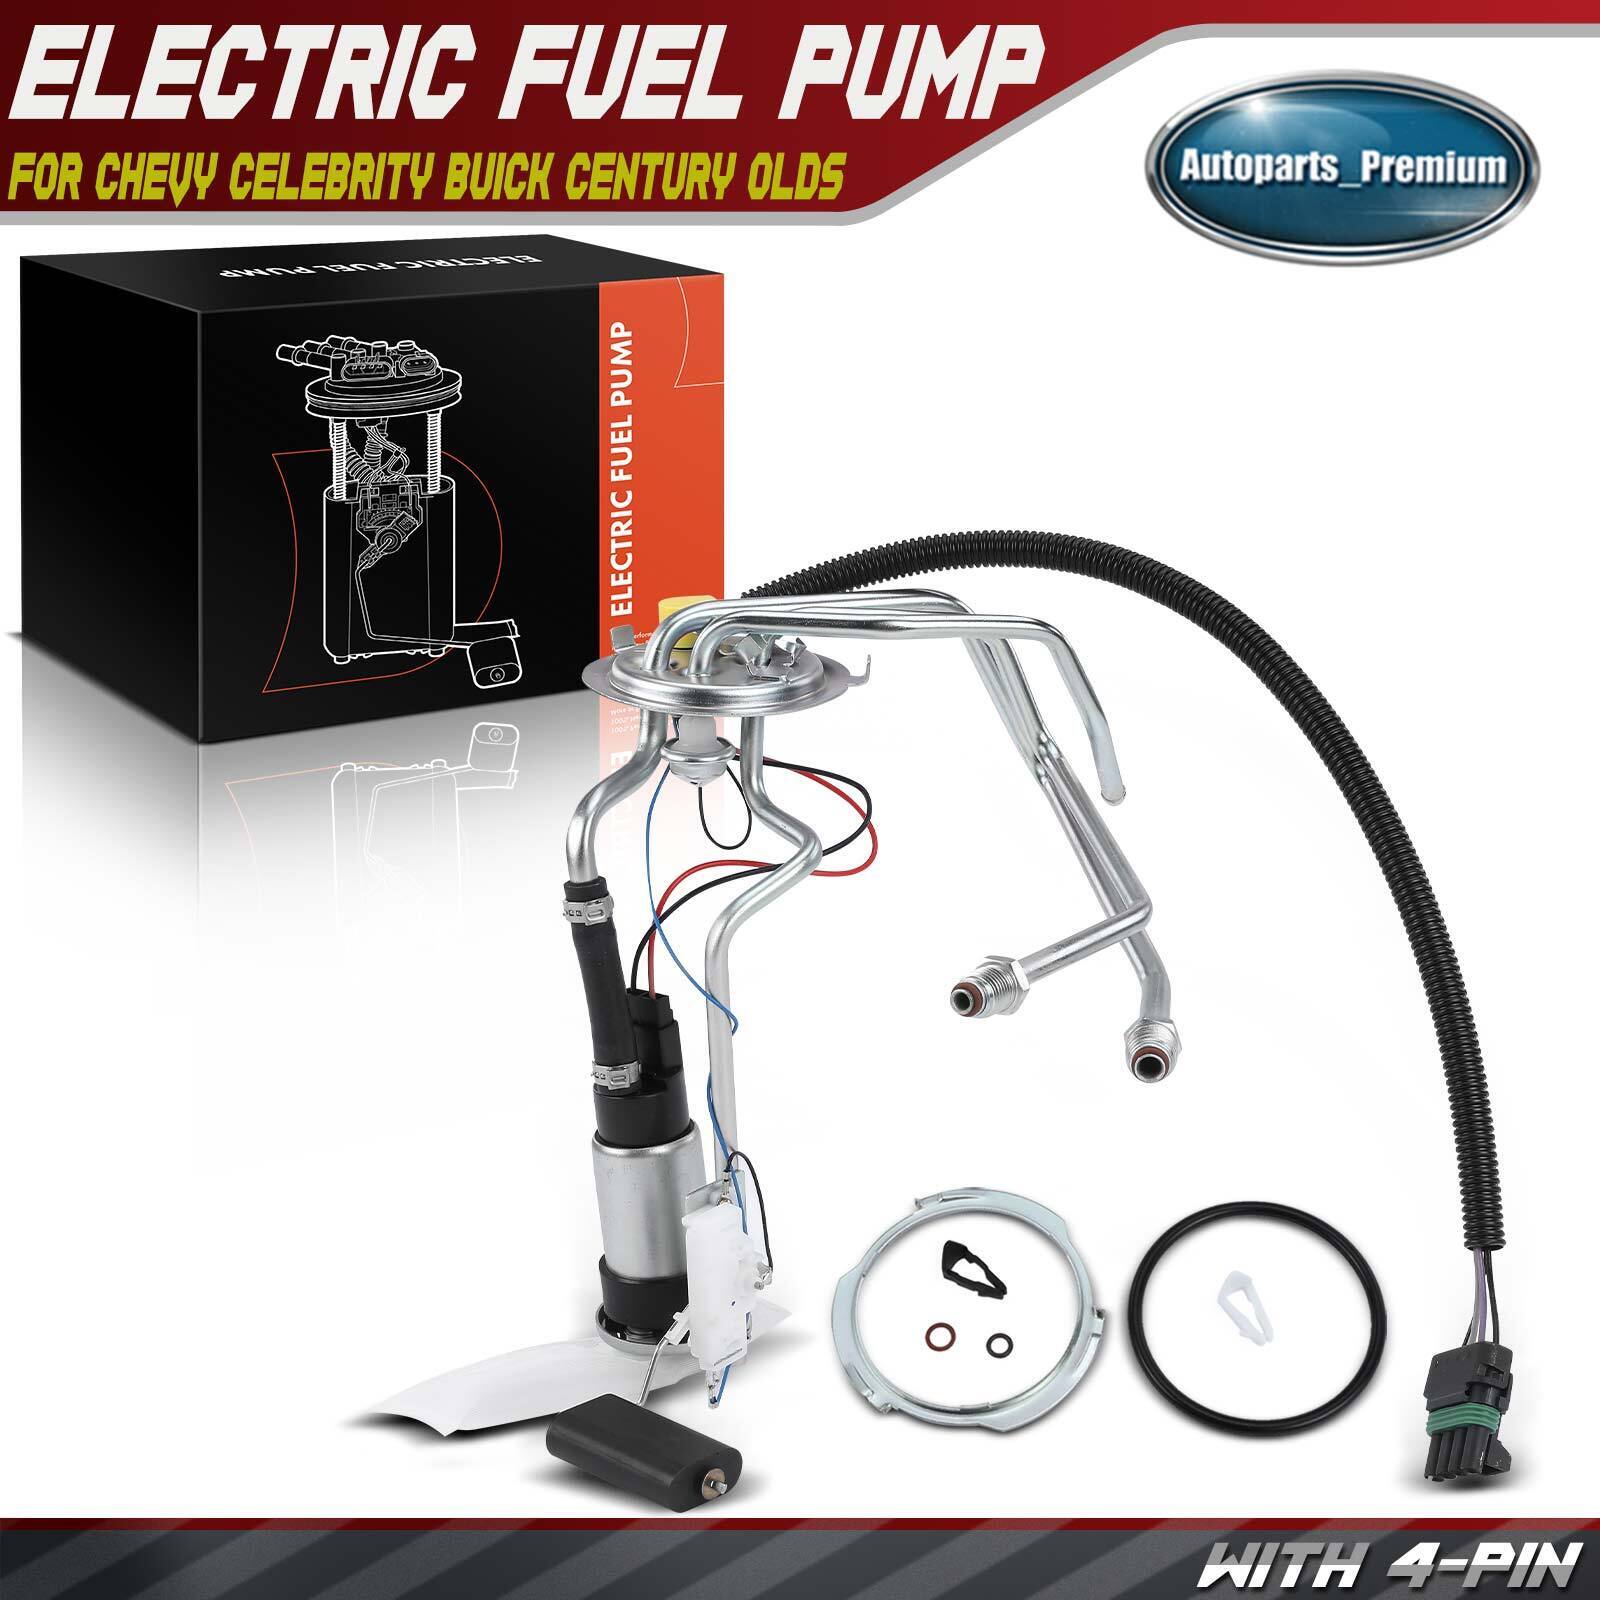 Fuel Pump Assembly for Chevrolet Celebrity Buick Century Oldsmobile Pontiac 6000